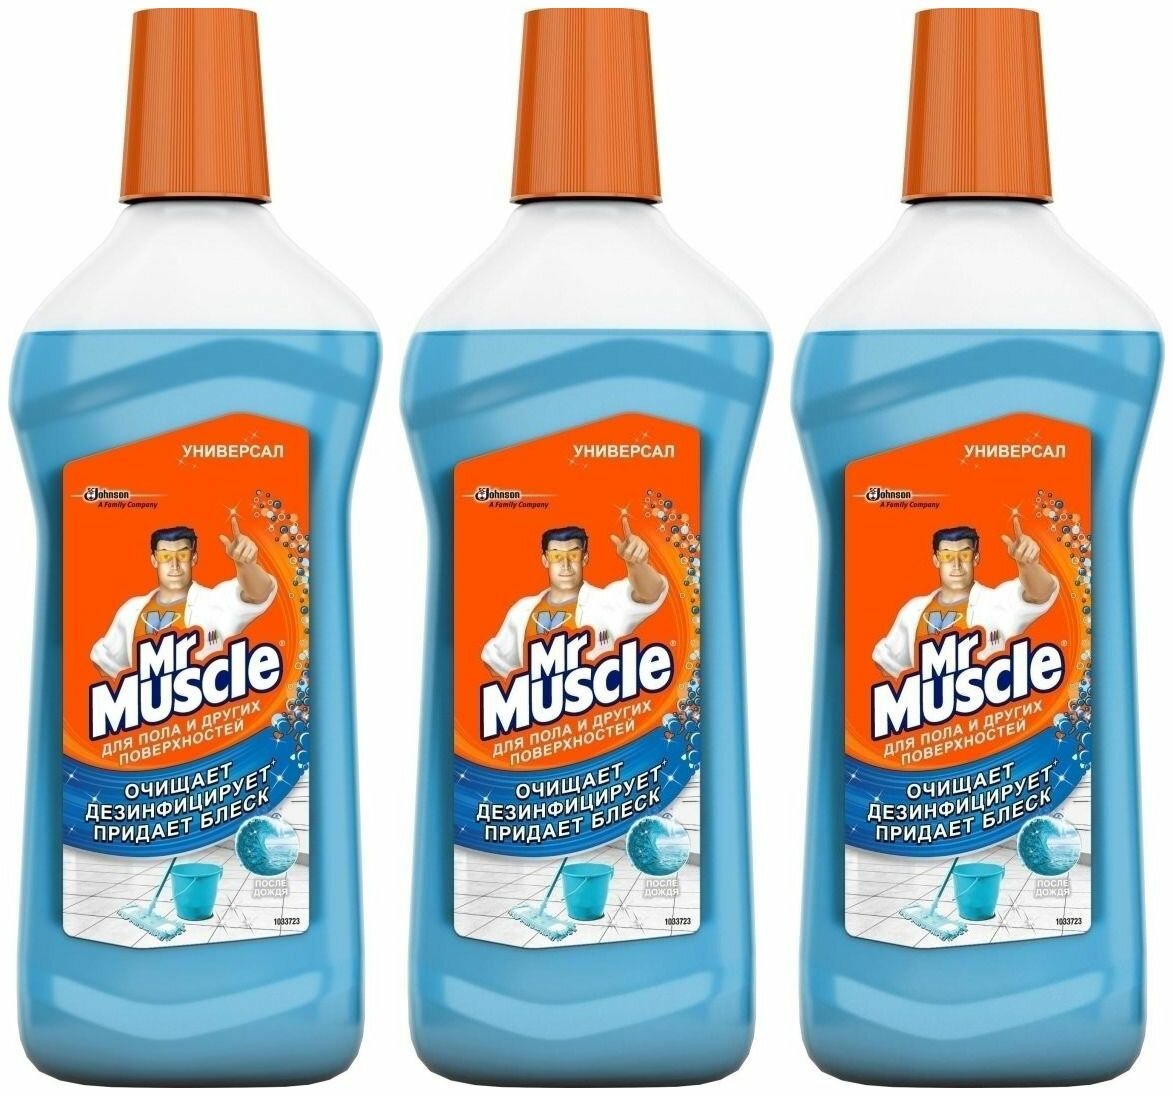 Mr. Muscle Средство чистящее для полов После дождя 500 мл 3 штуки